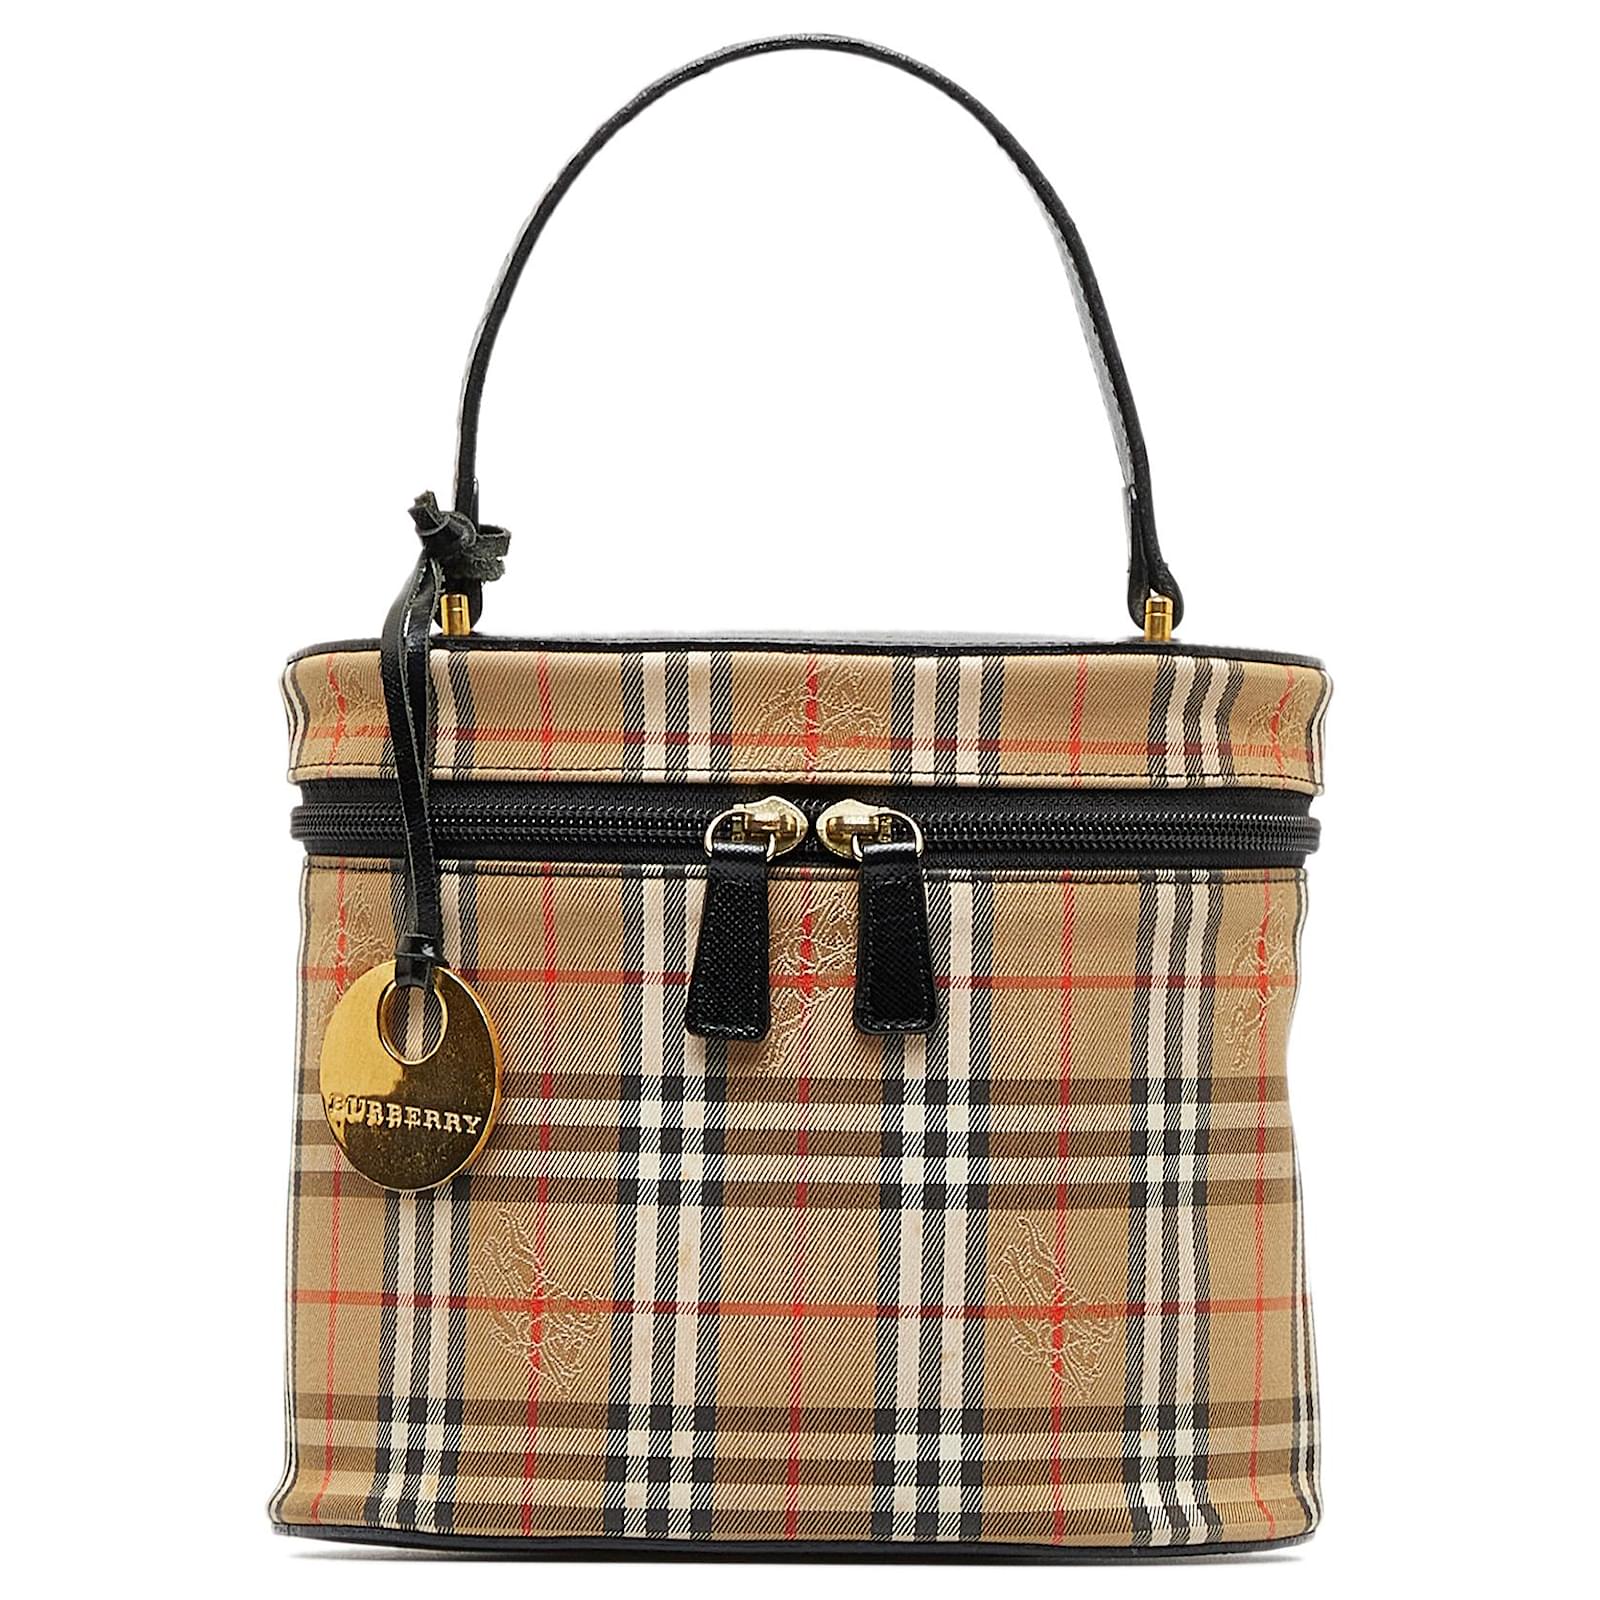 Vanity cloth handbag